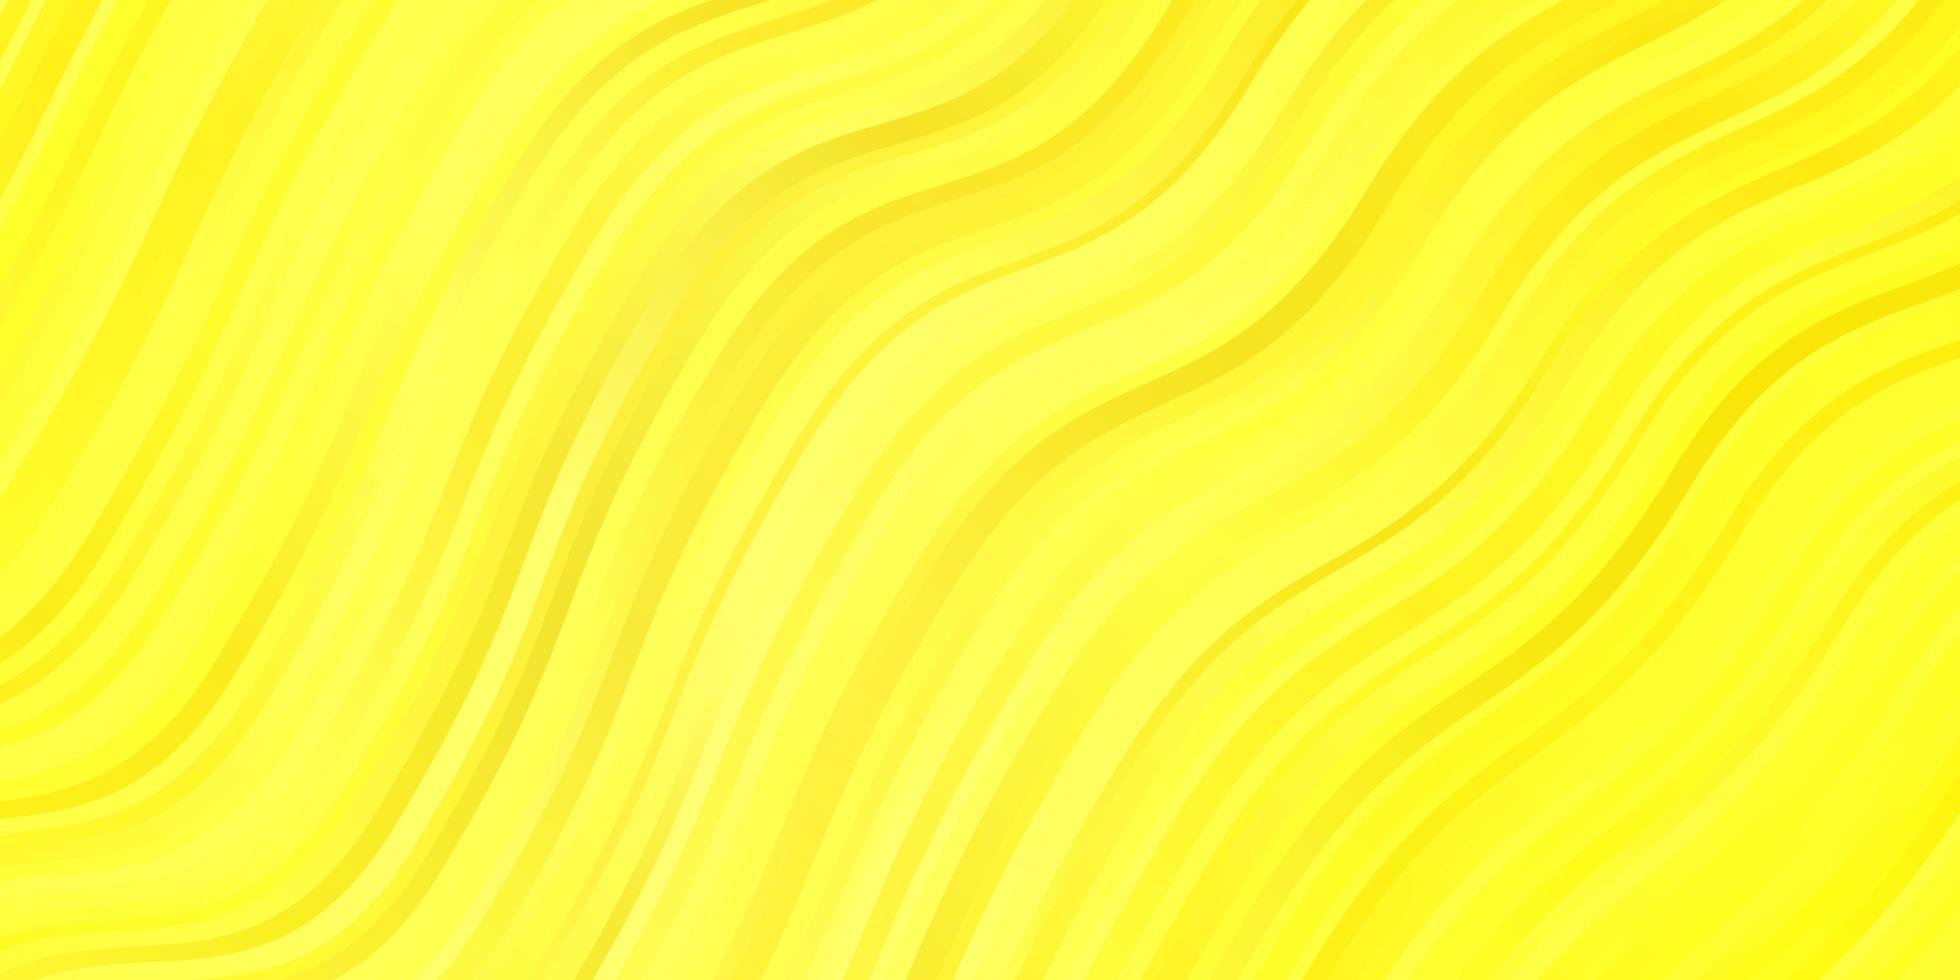 layout de vetor amarelo claro com curvas.